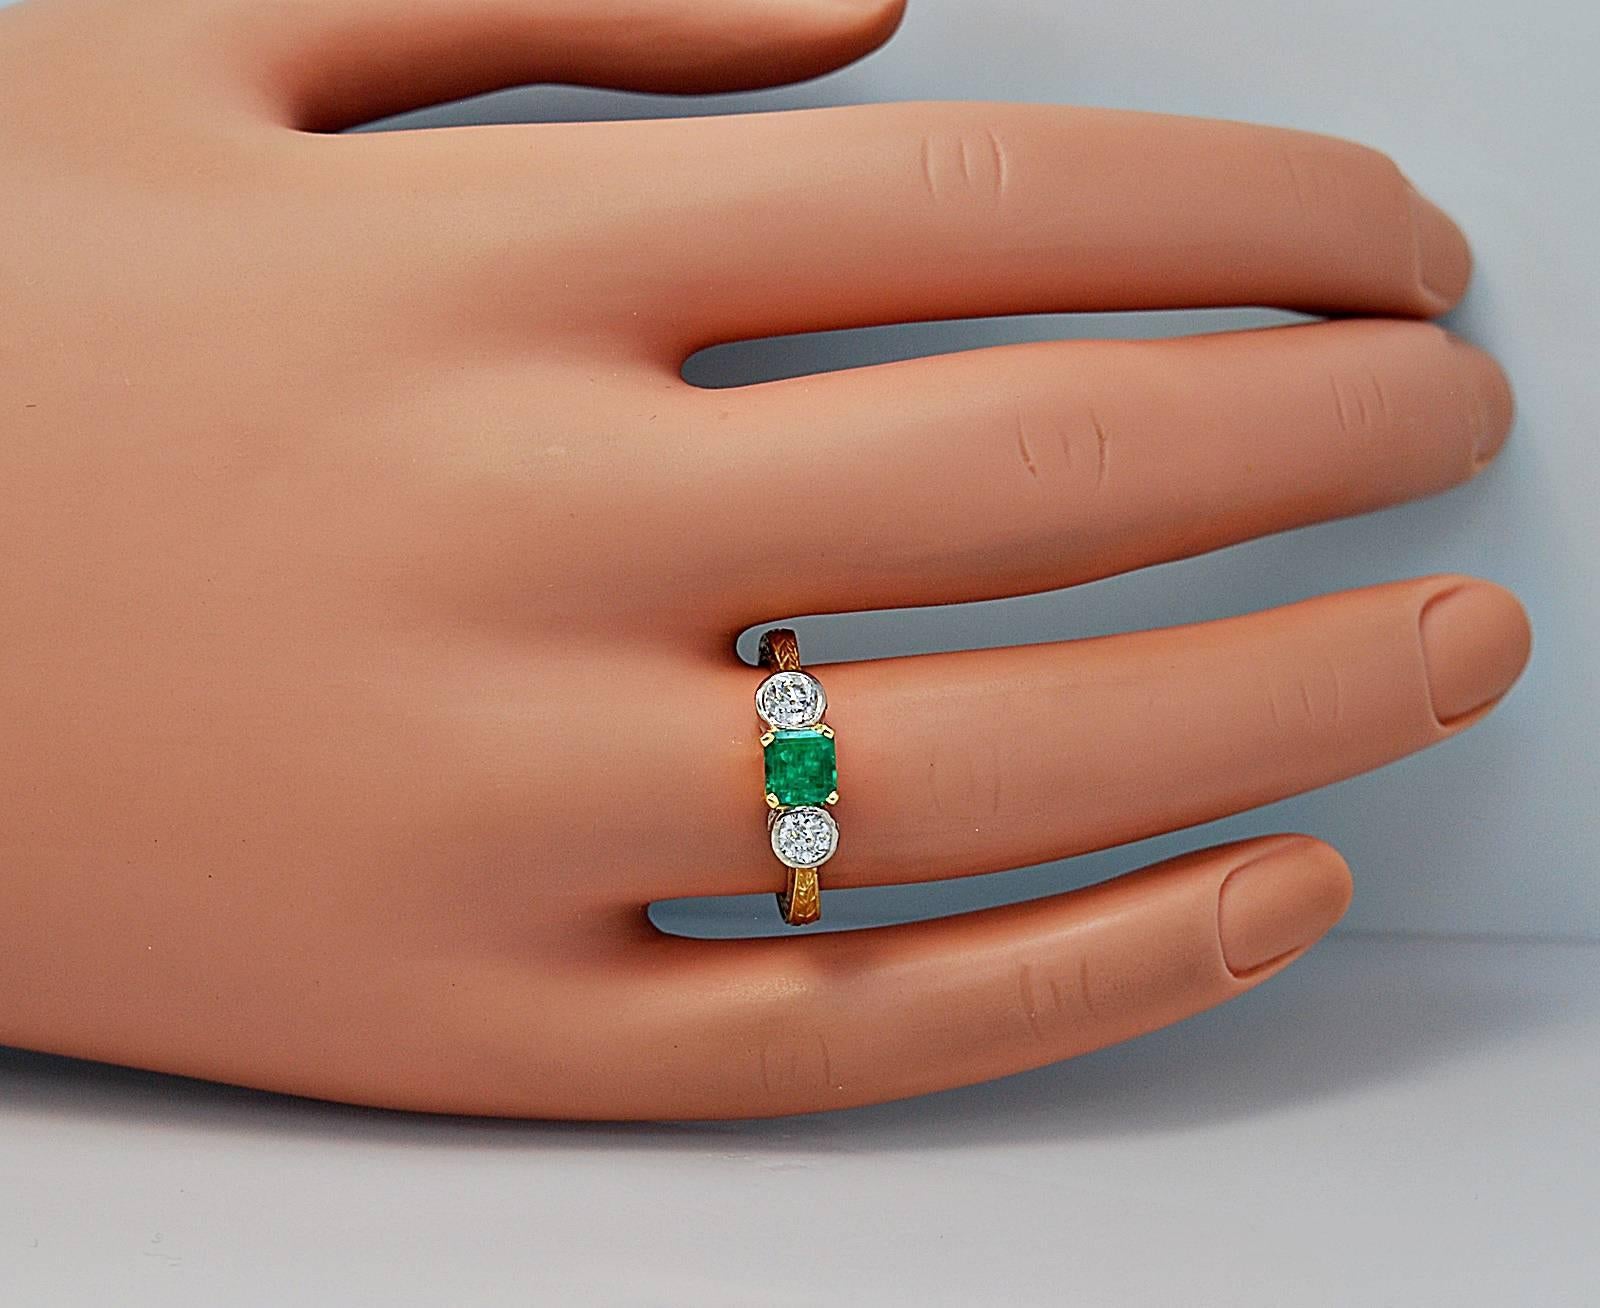 .75 carat emerald cut diamond ring